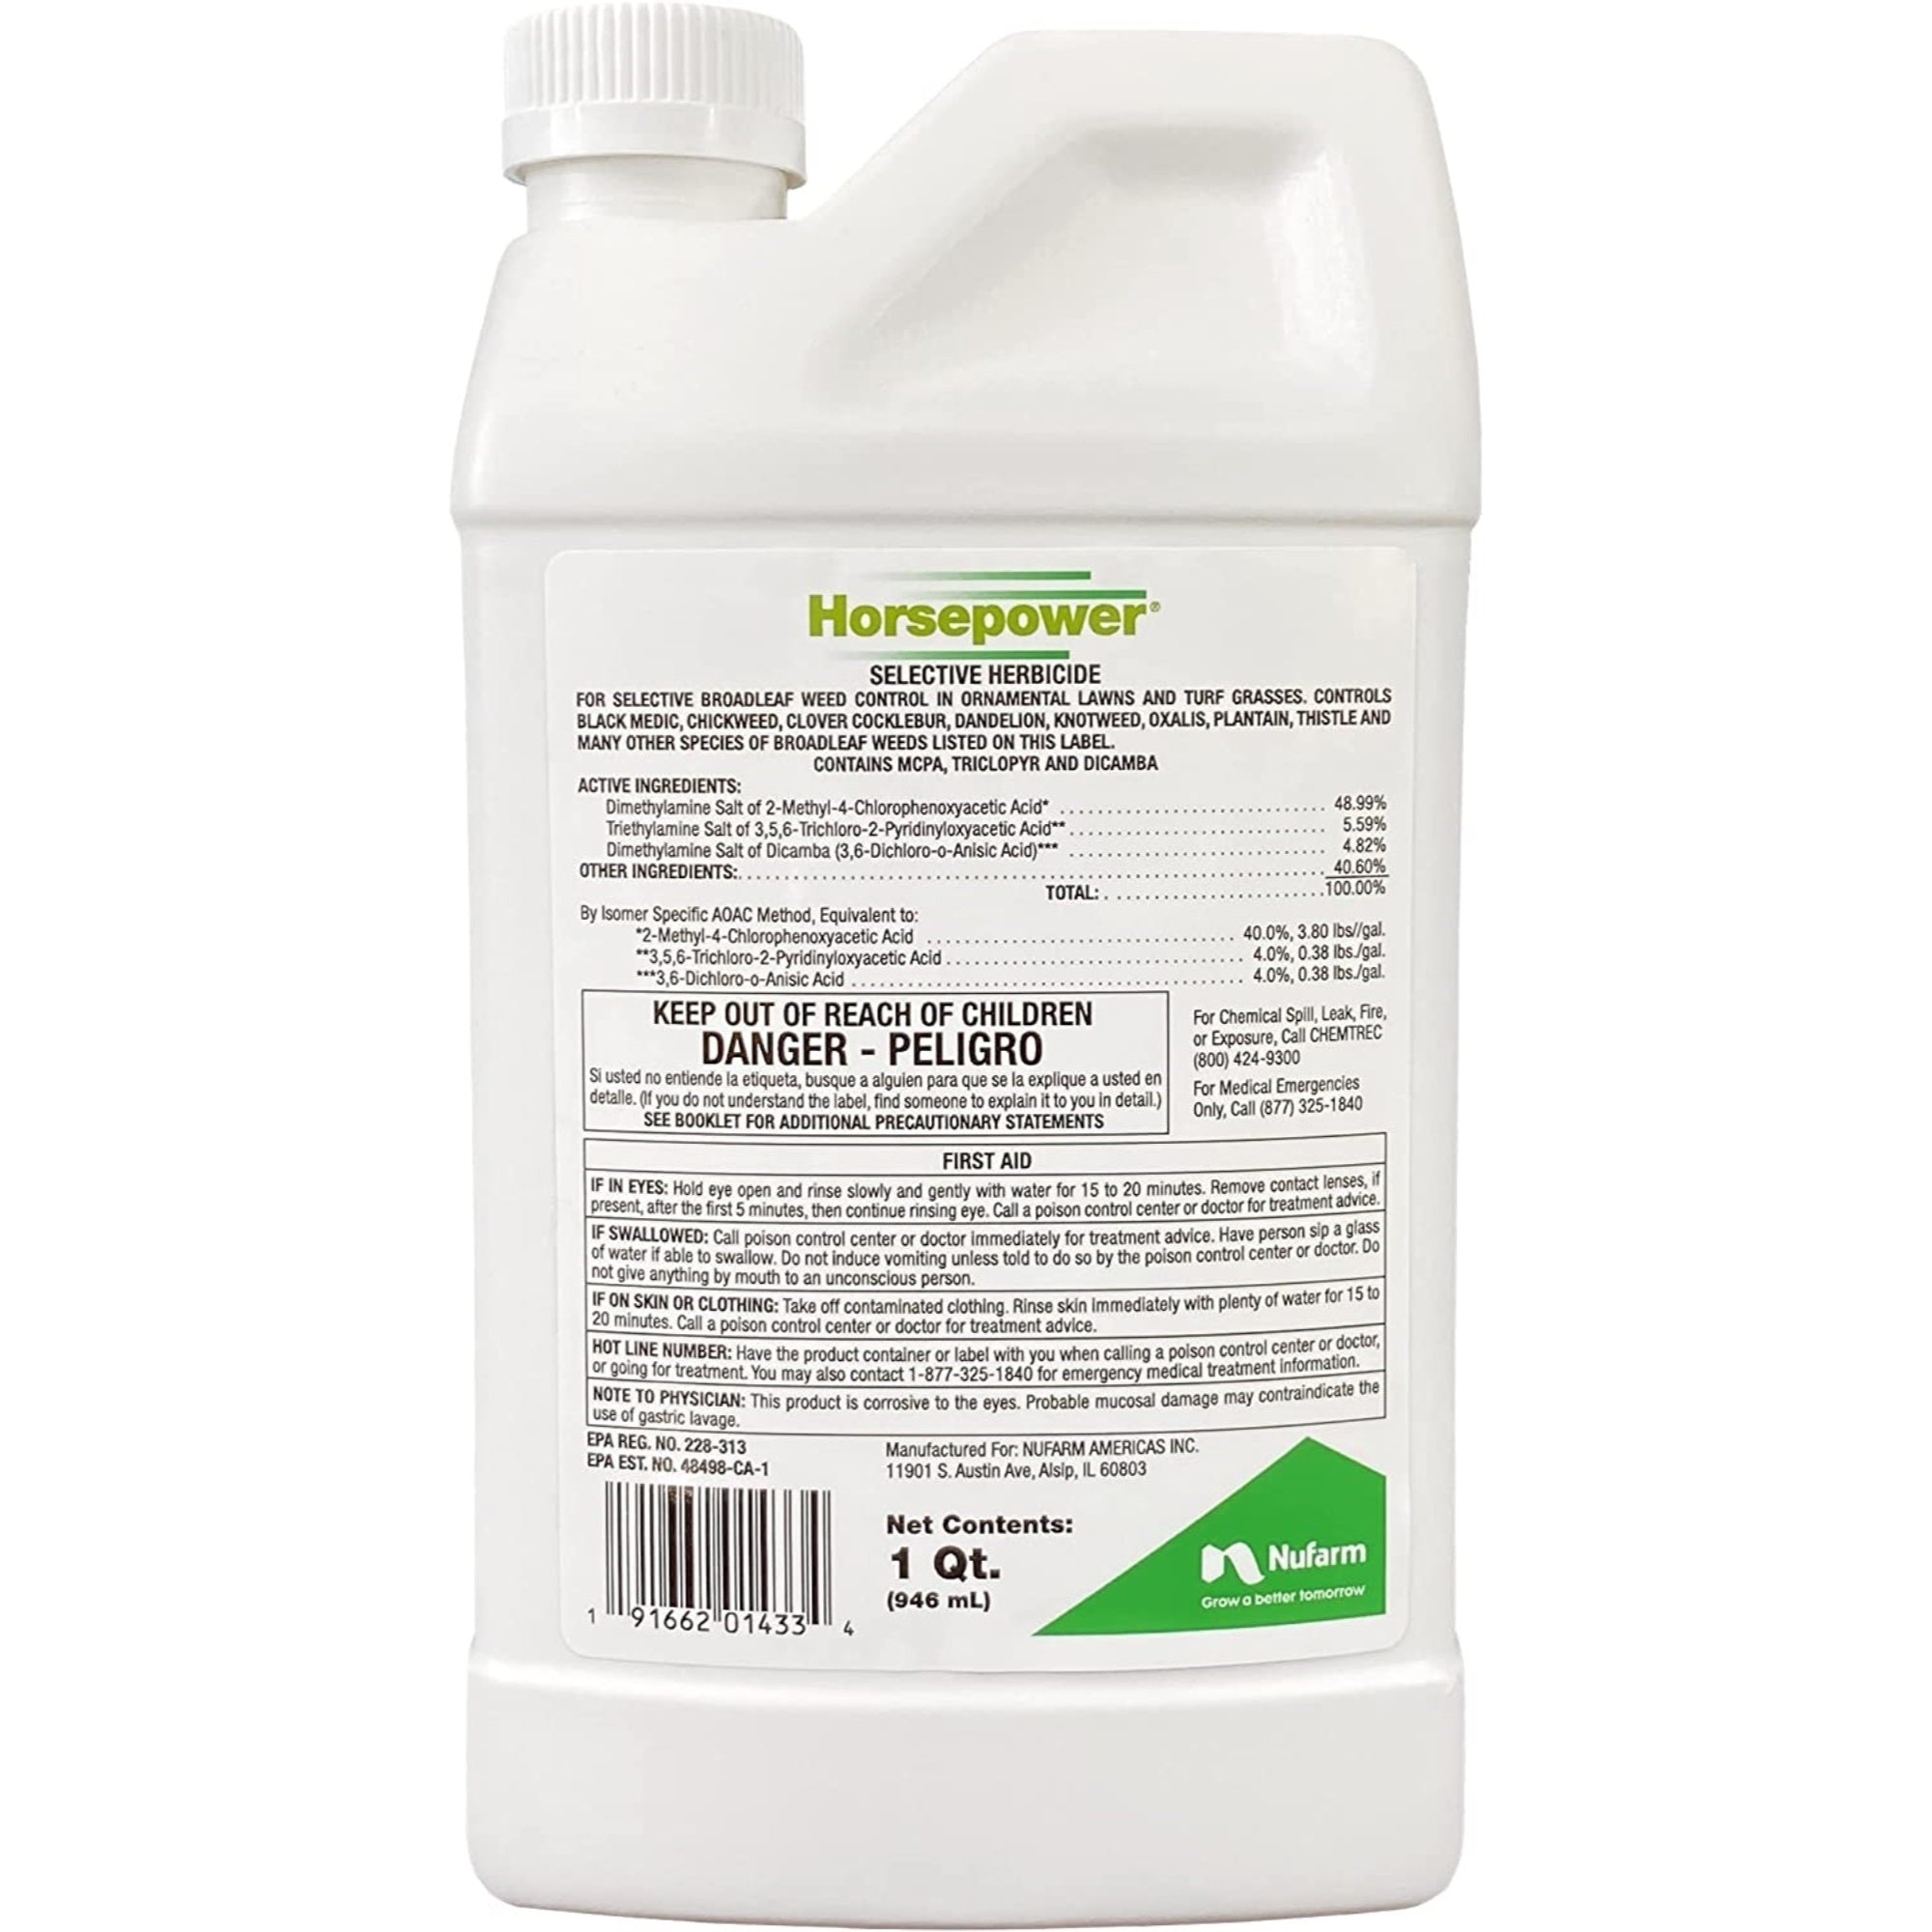 Nufarm Horsepower Selective Herbicide, 32 Ounce Bottle